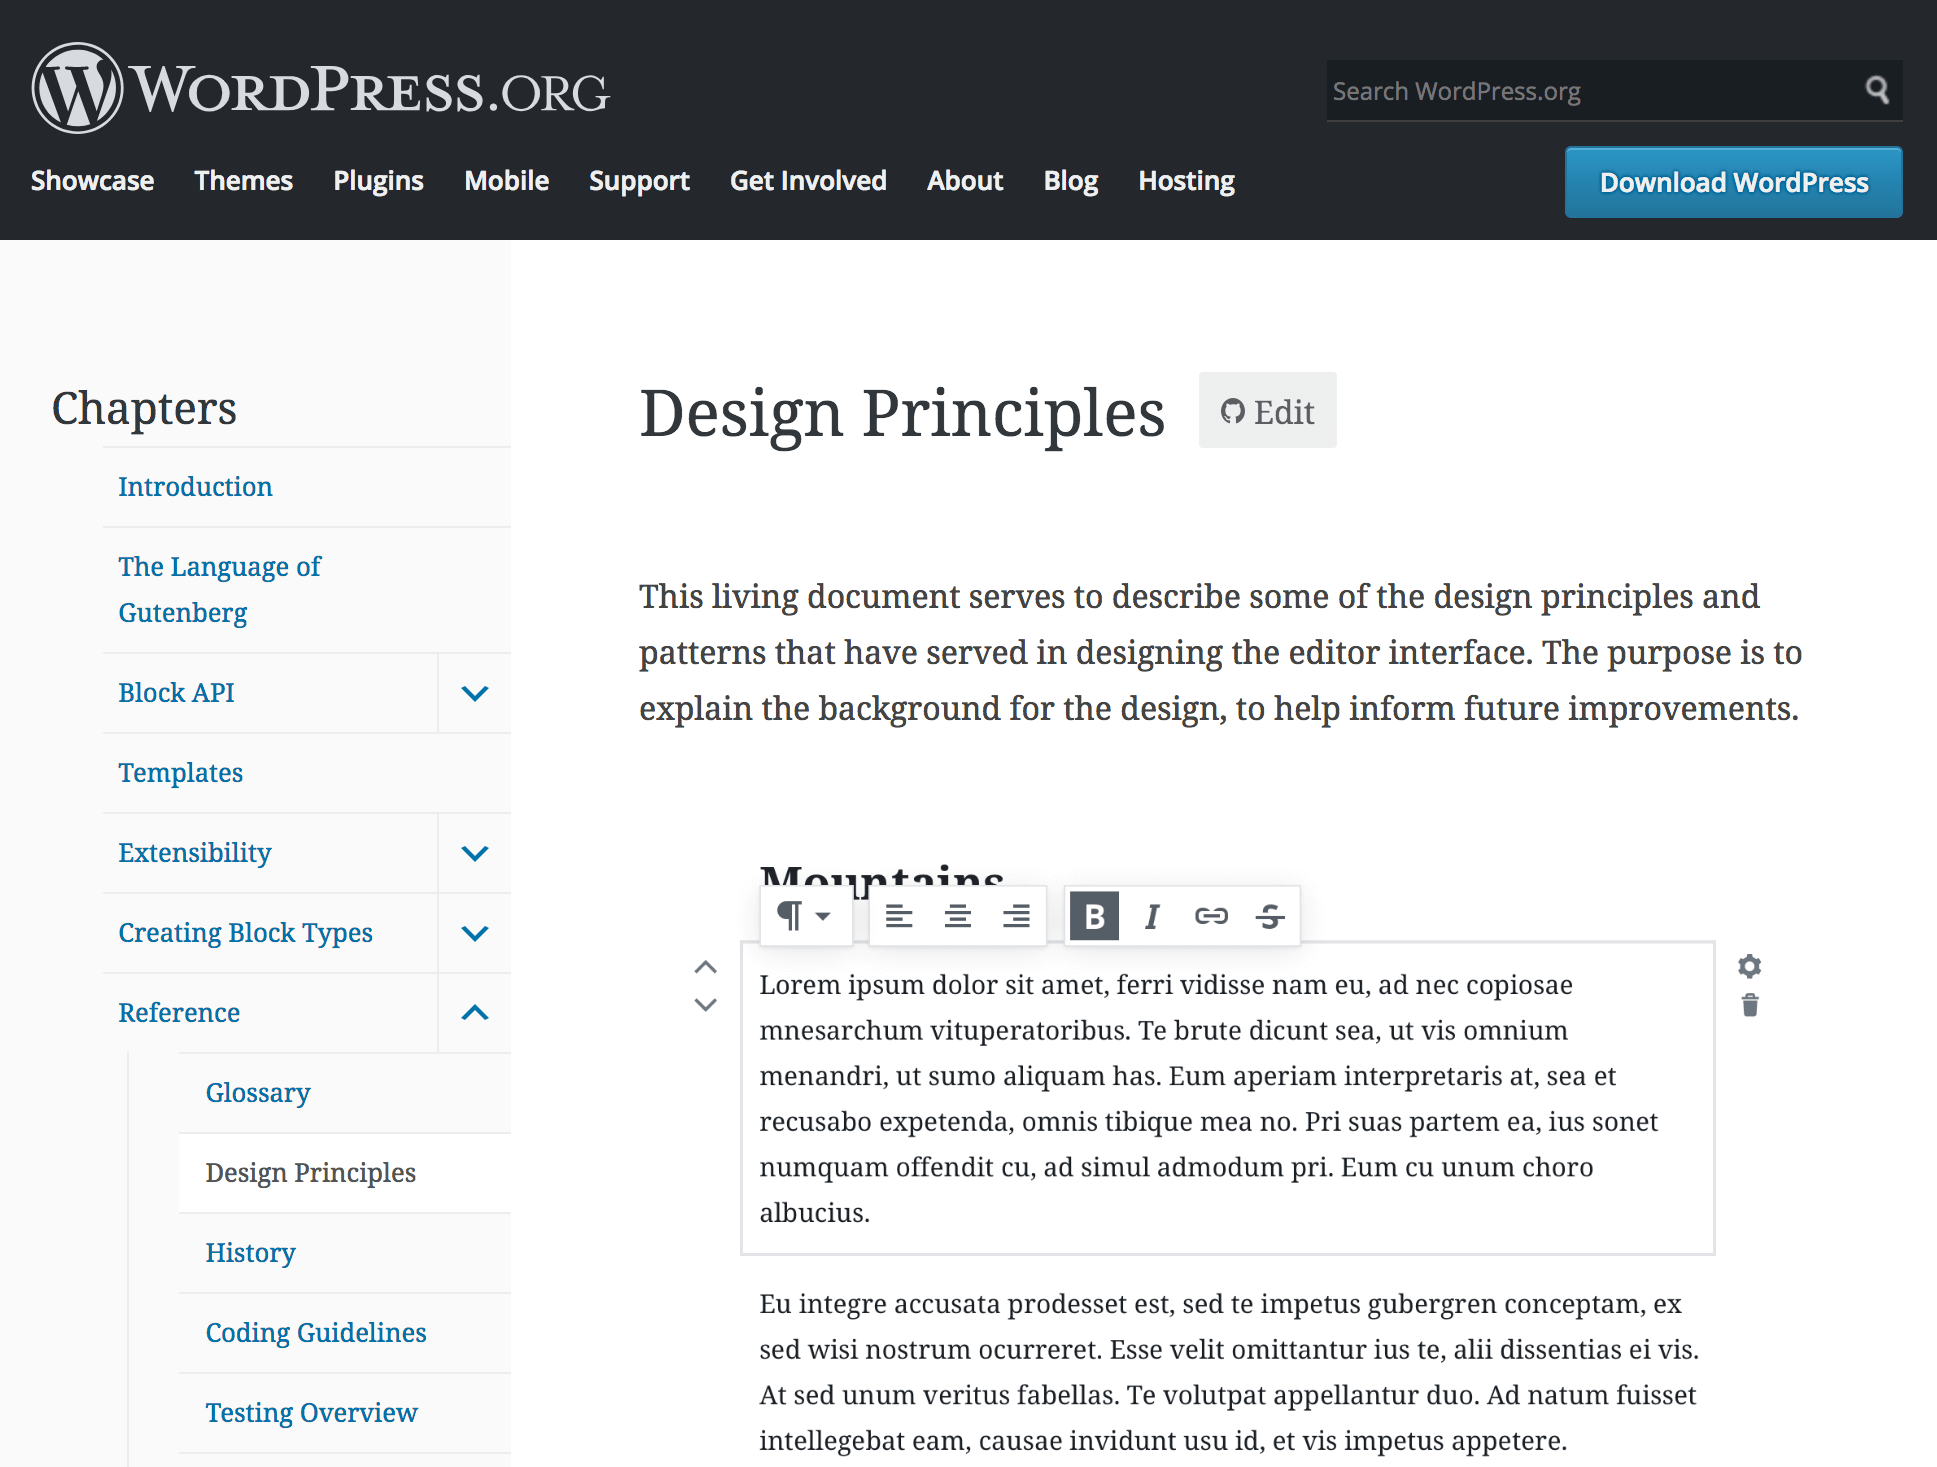 WordPress' Design Principles page.